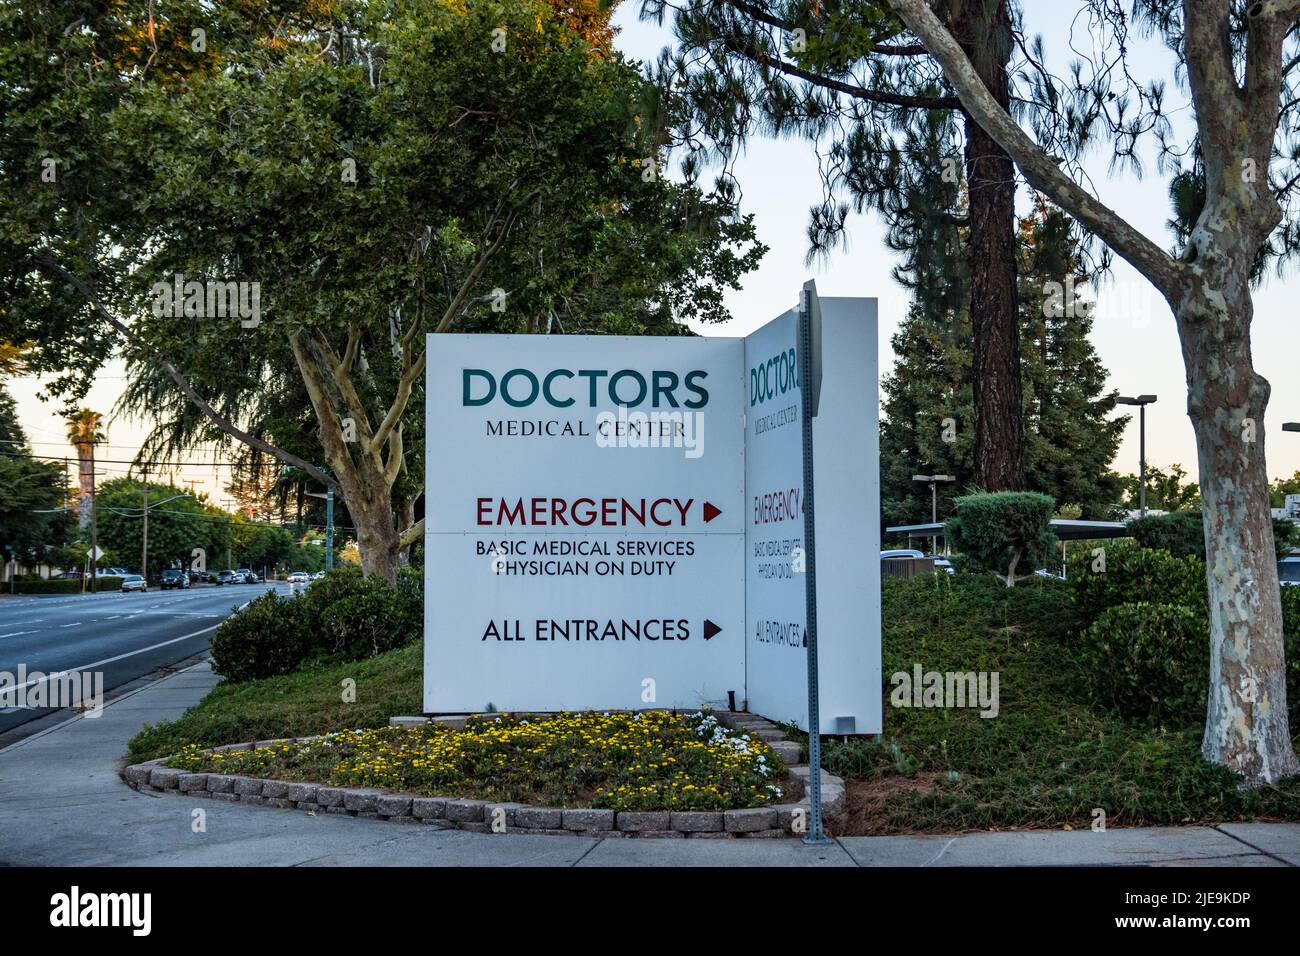 A sign for Doctors Medical Center in Modesto California USA Stock Photo